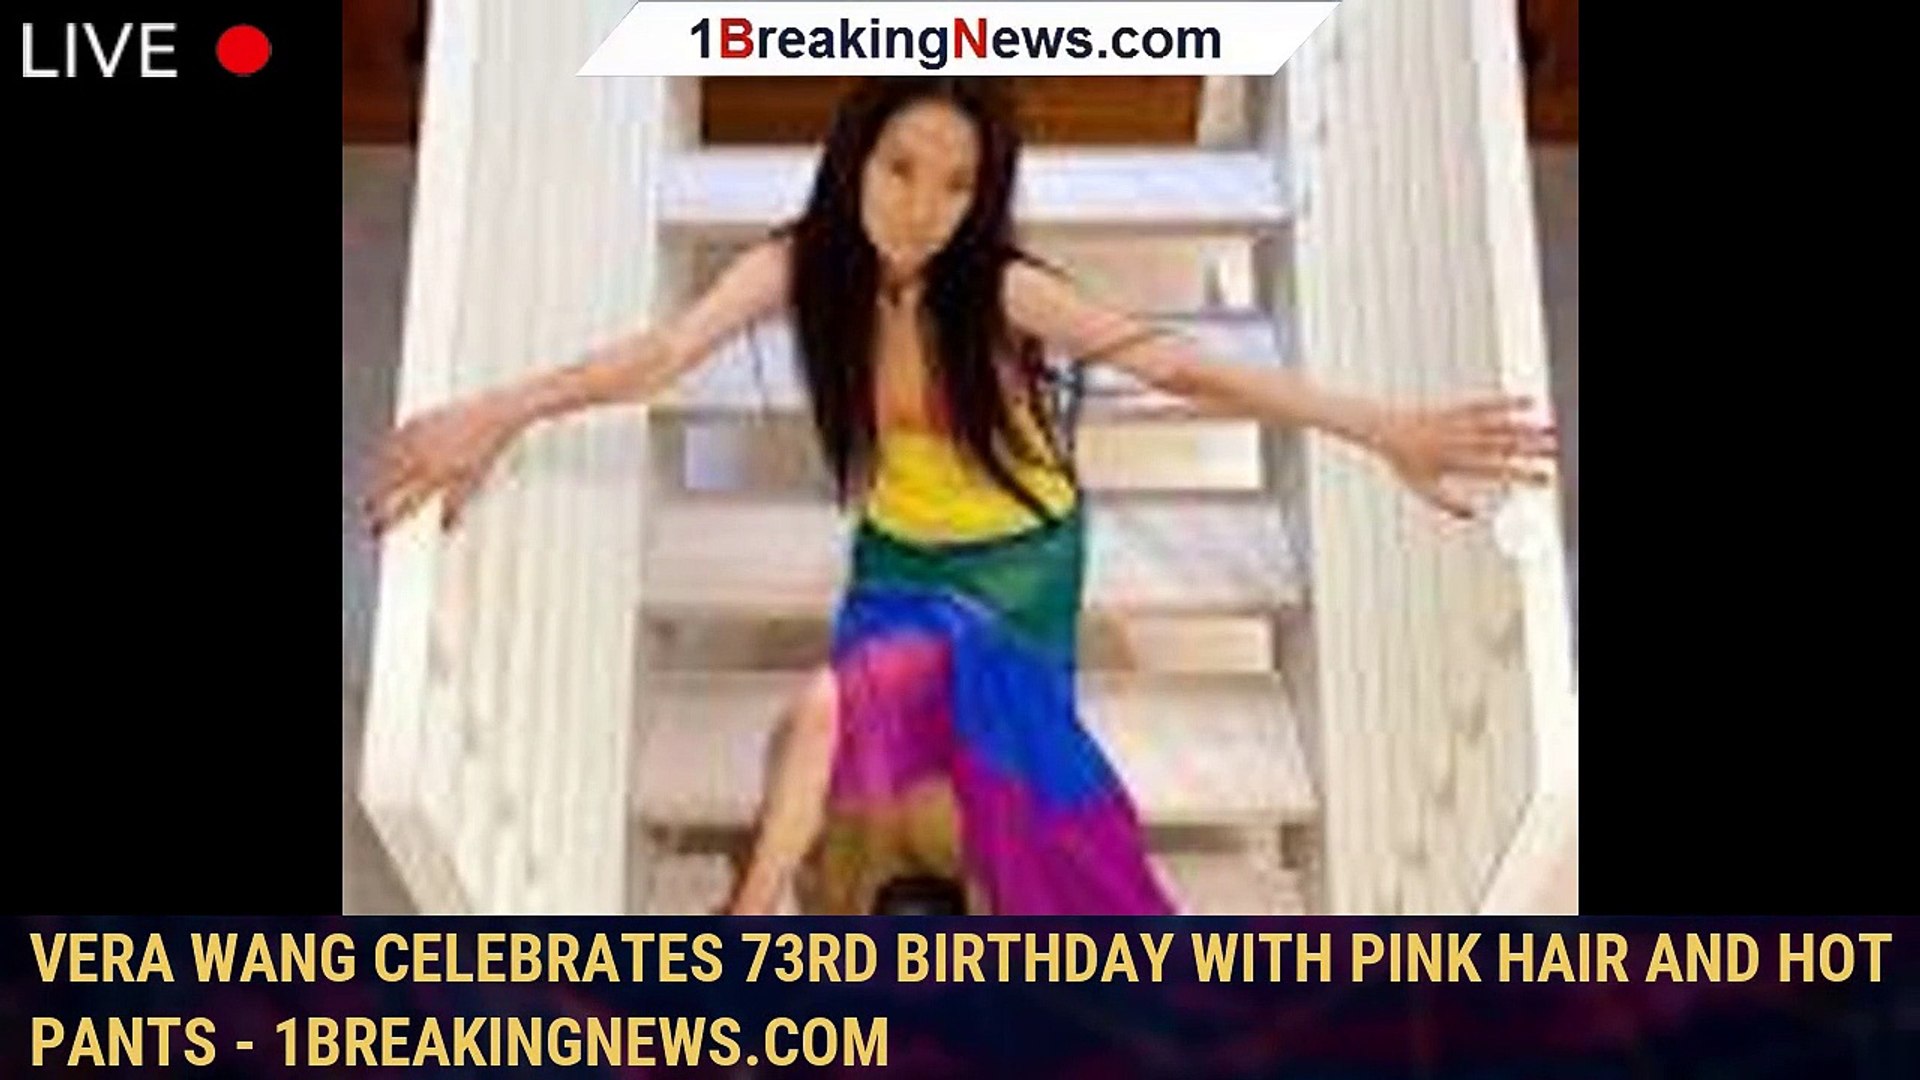 Vera Wang celebrates 73rd birthday with pink hair and hot pants